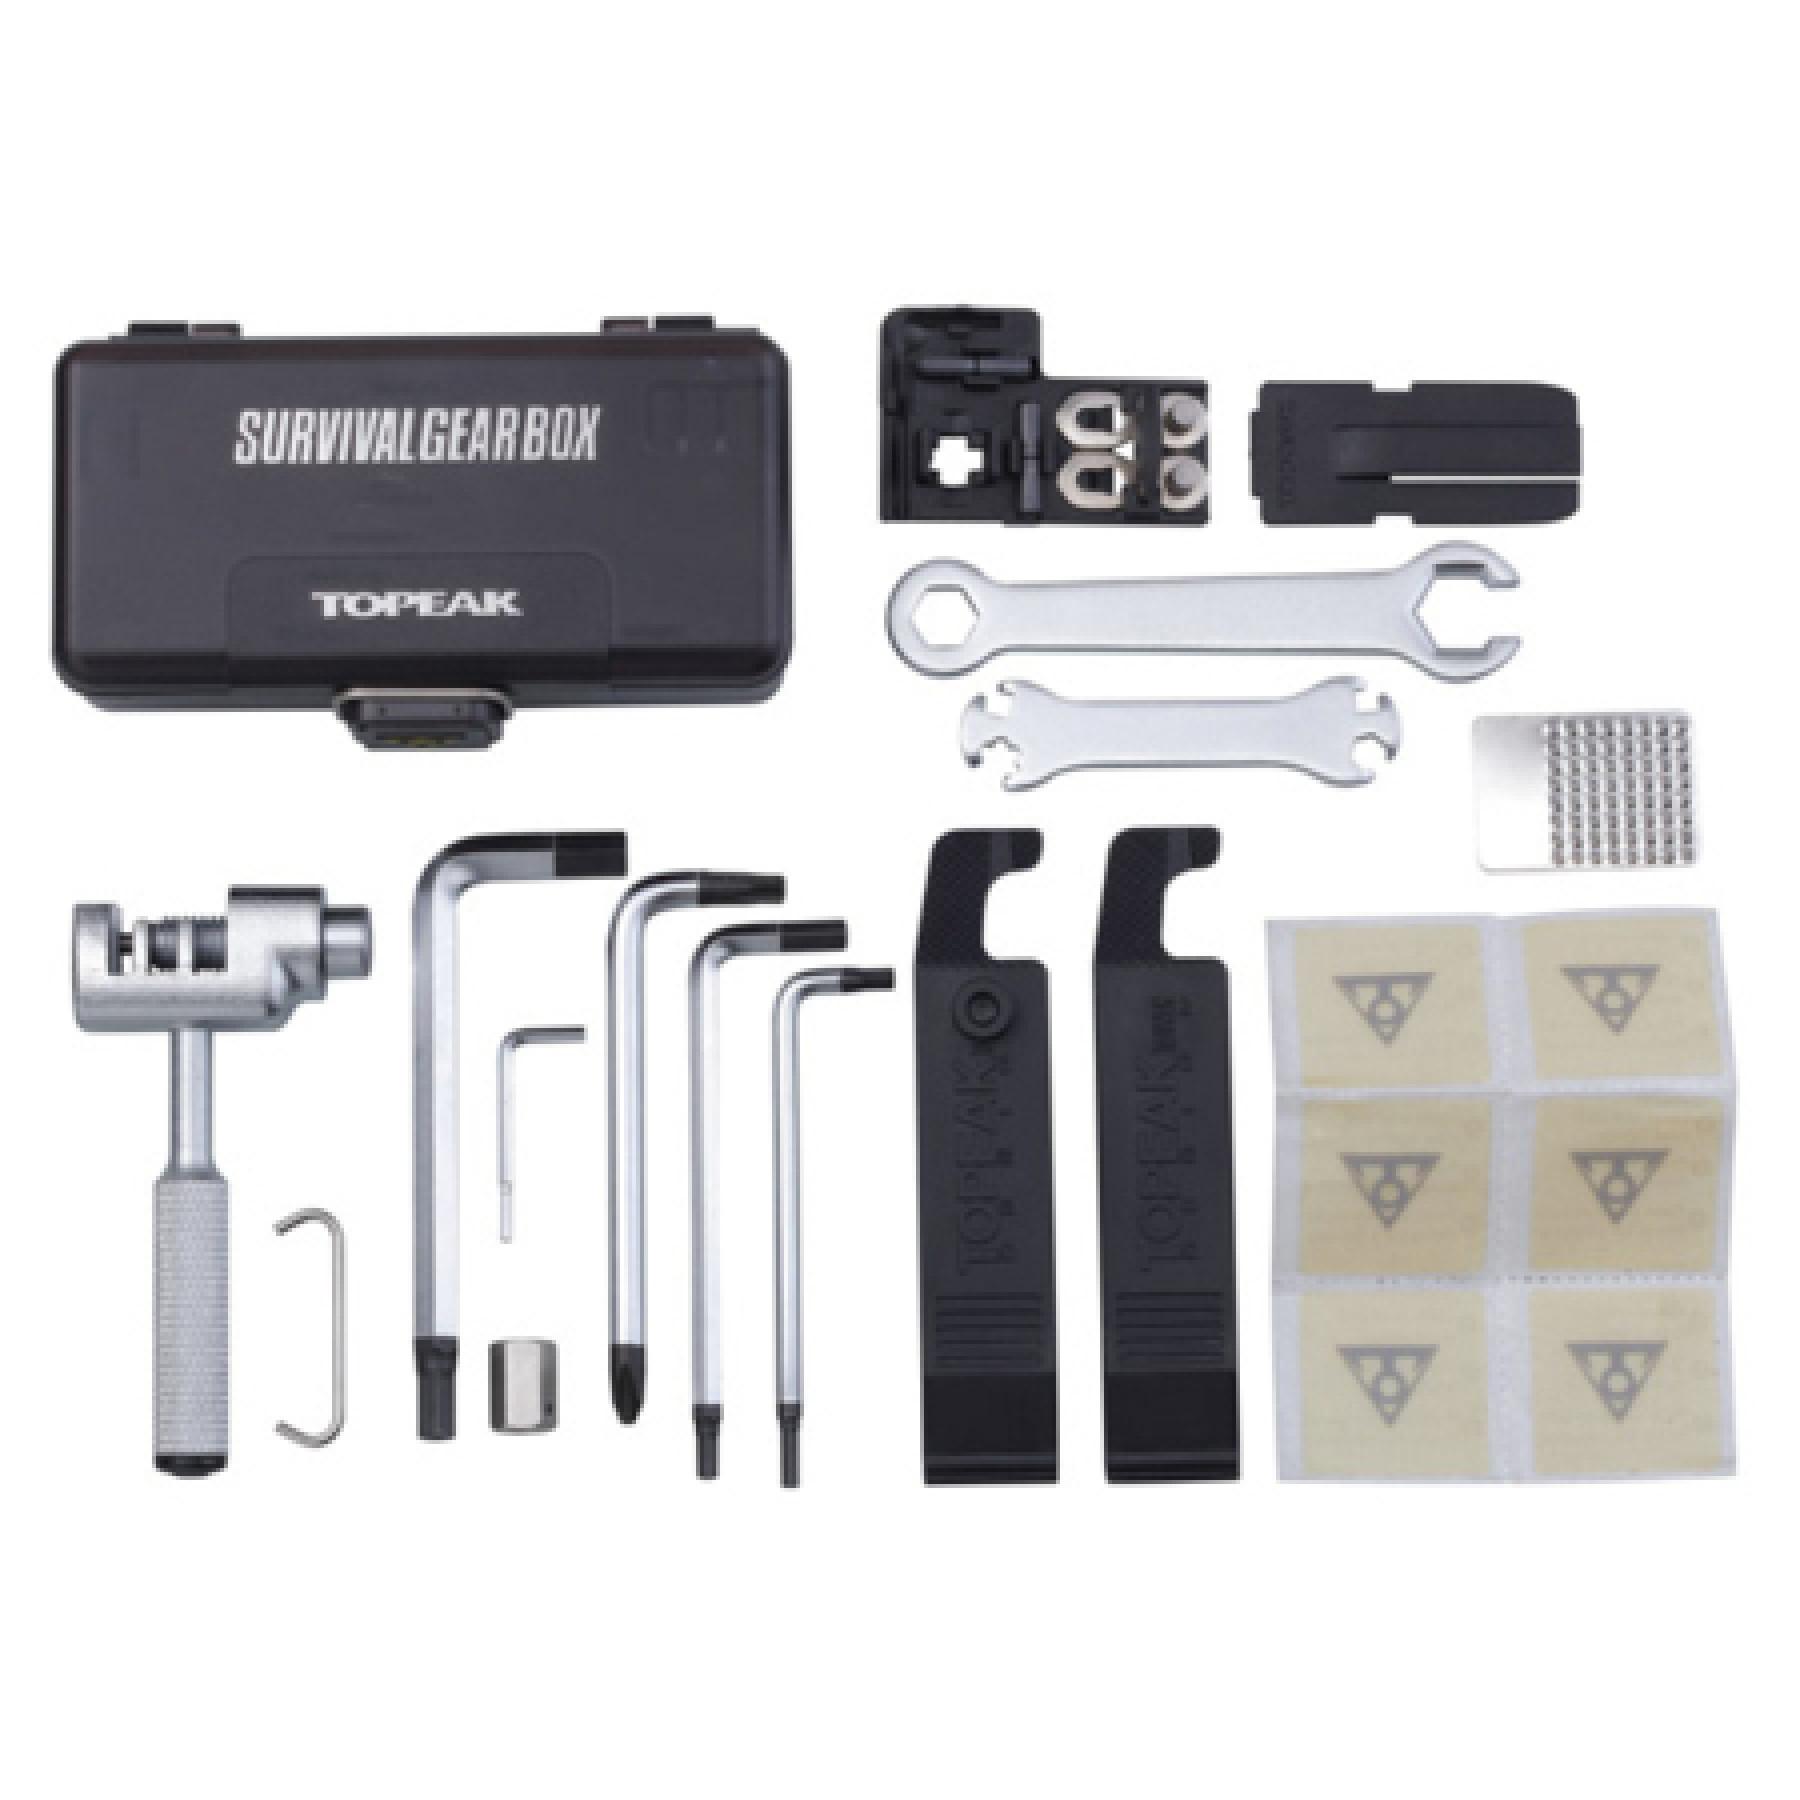 Mini toolbox Topeak Survival Gear Box